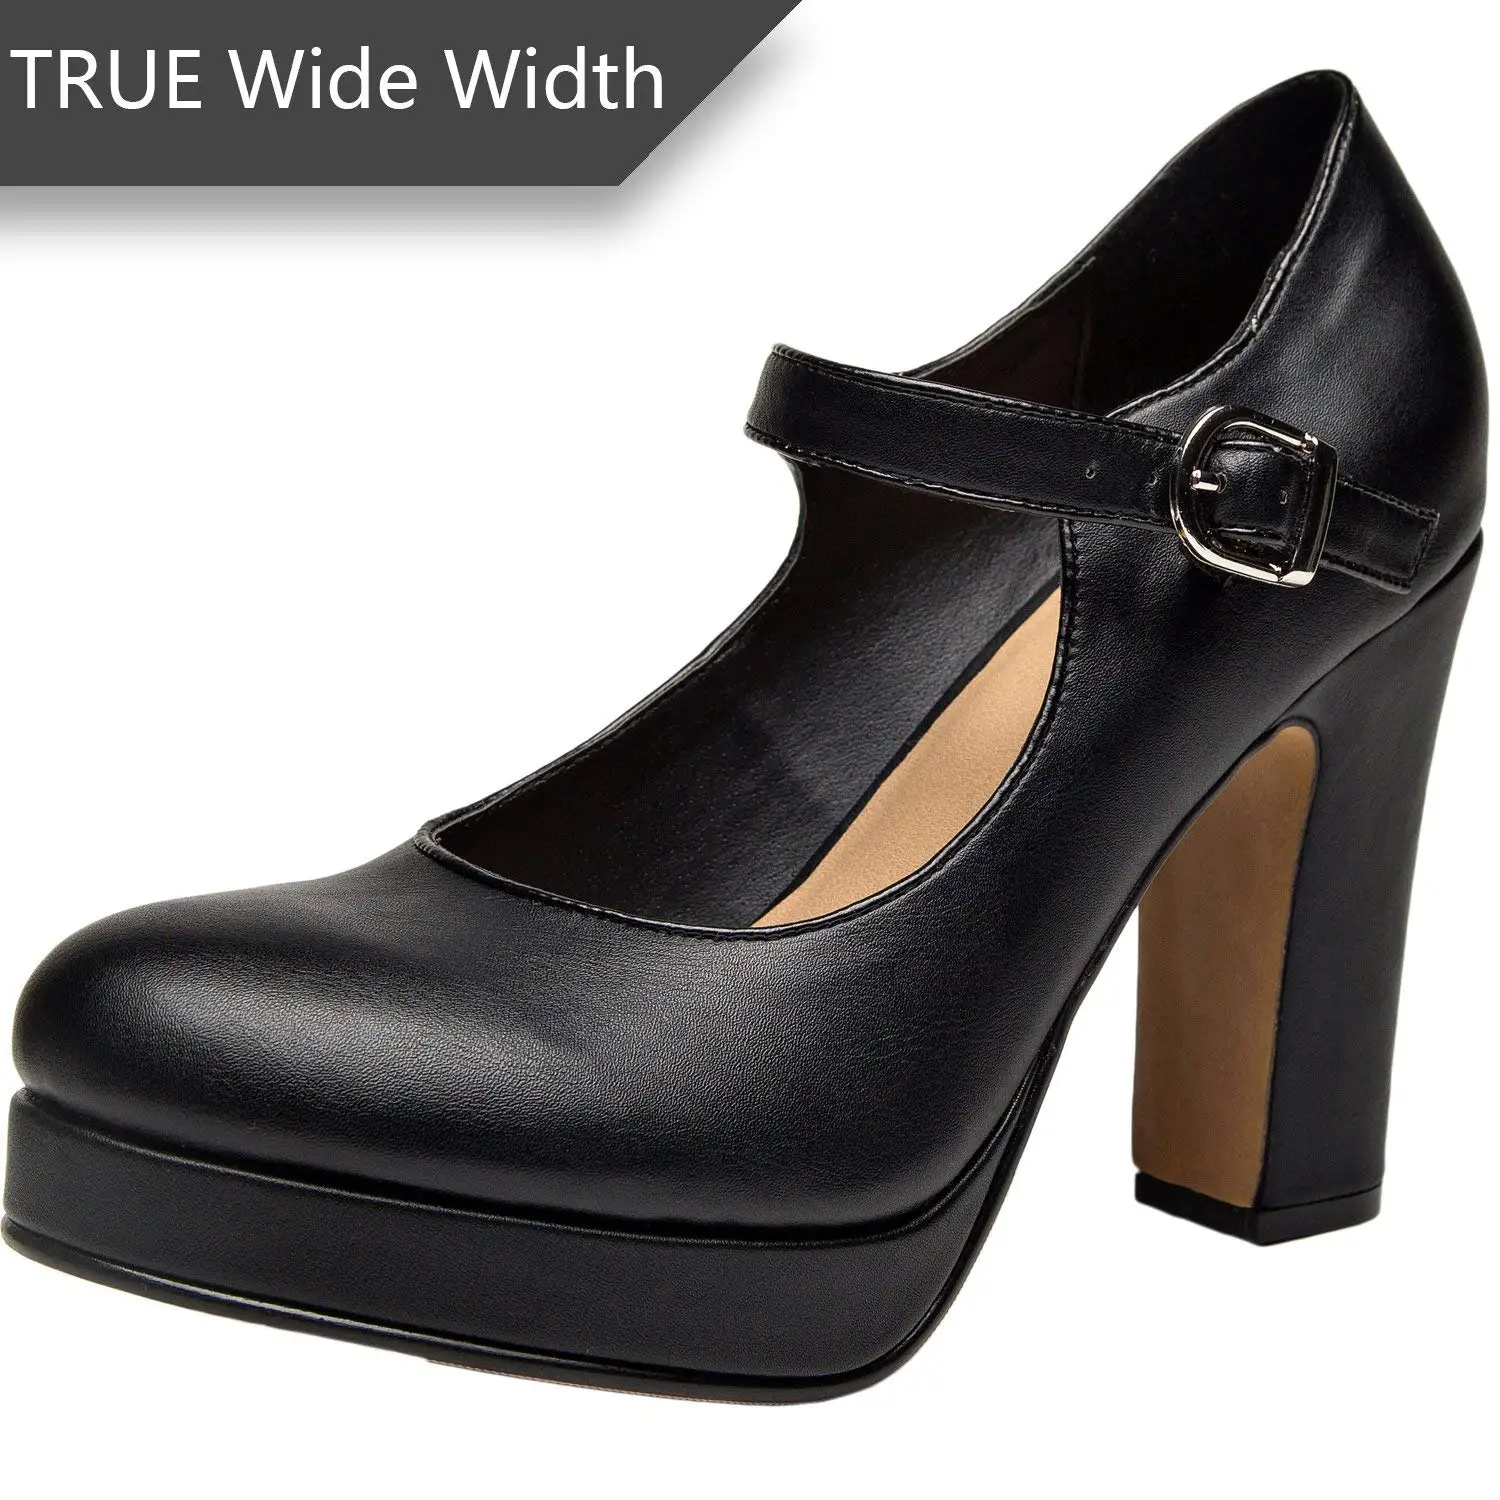 wide size heels